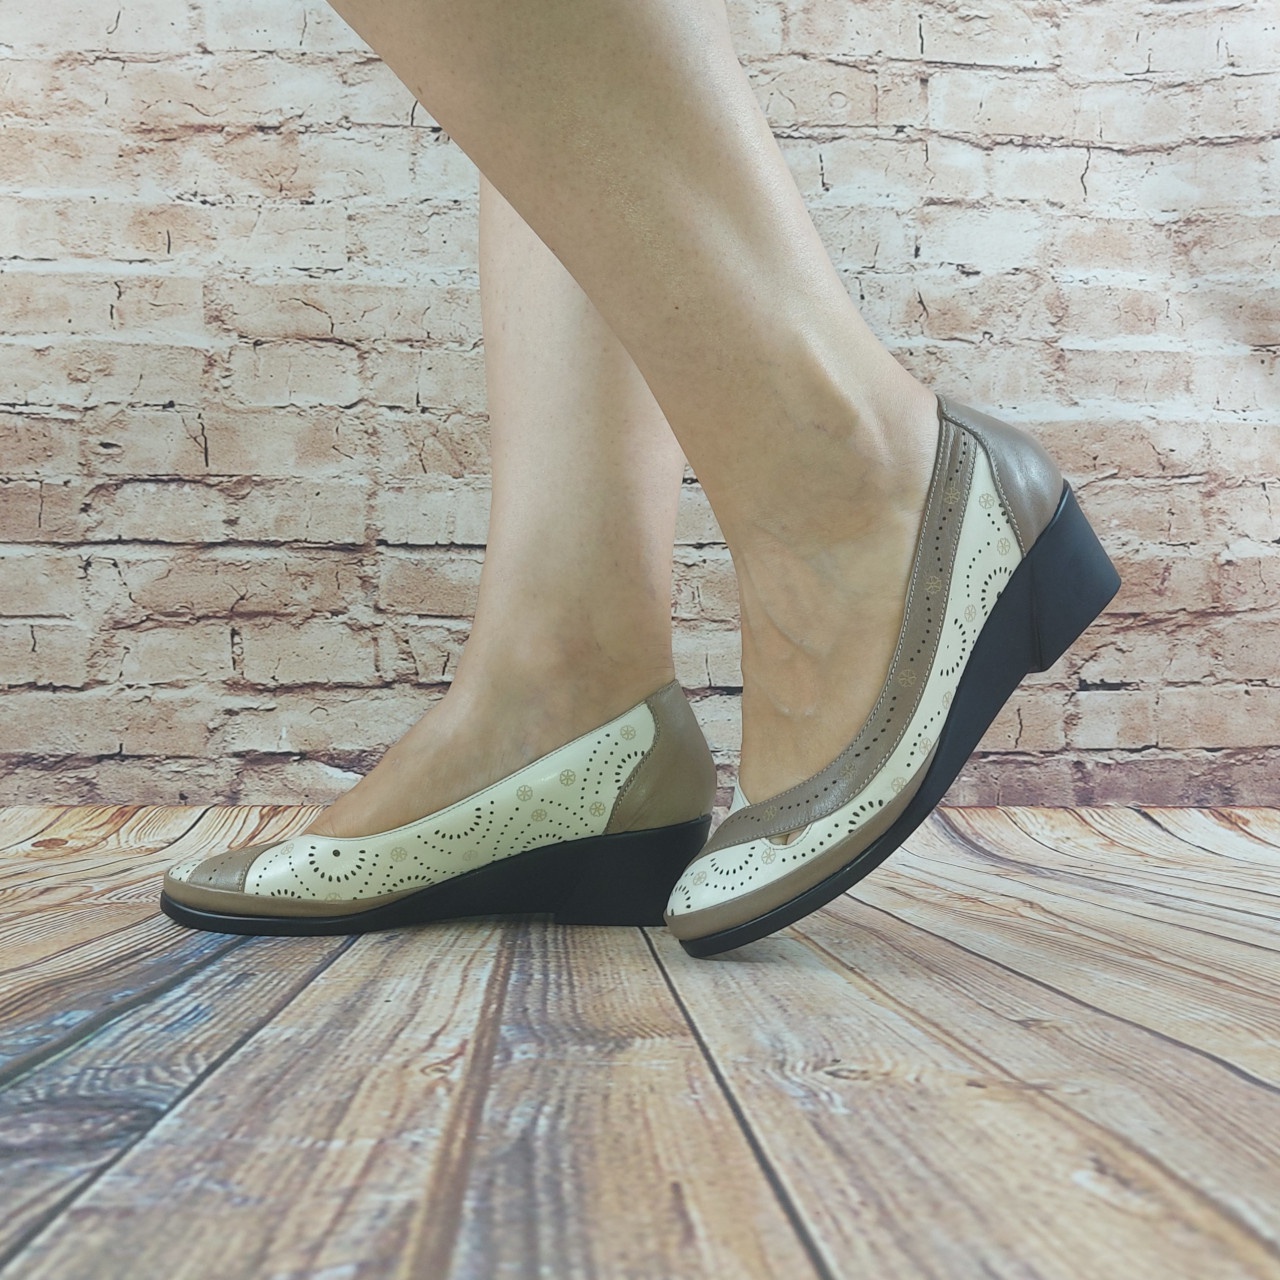 Туфли женские Marani Magli 762-16-78 бело-коричневые кожа танкетка размеры 36,37 